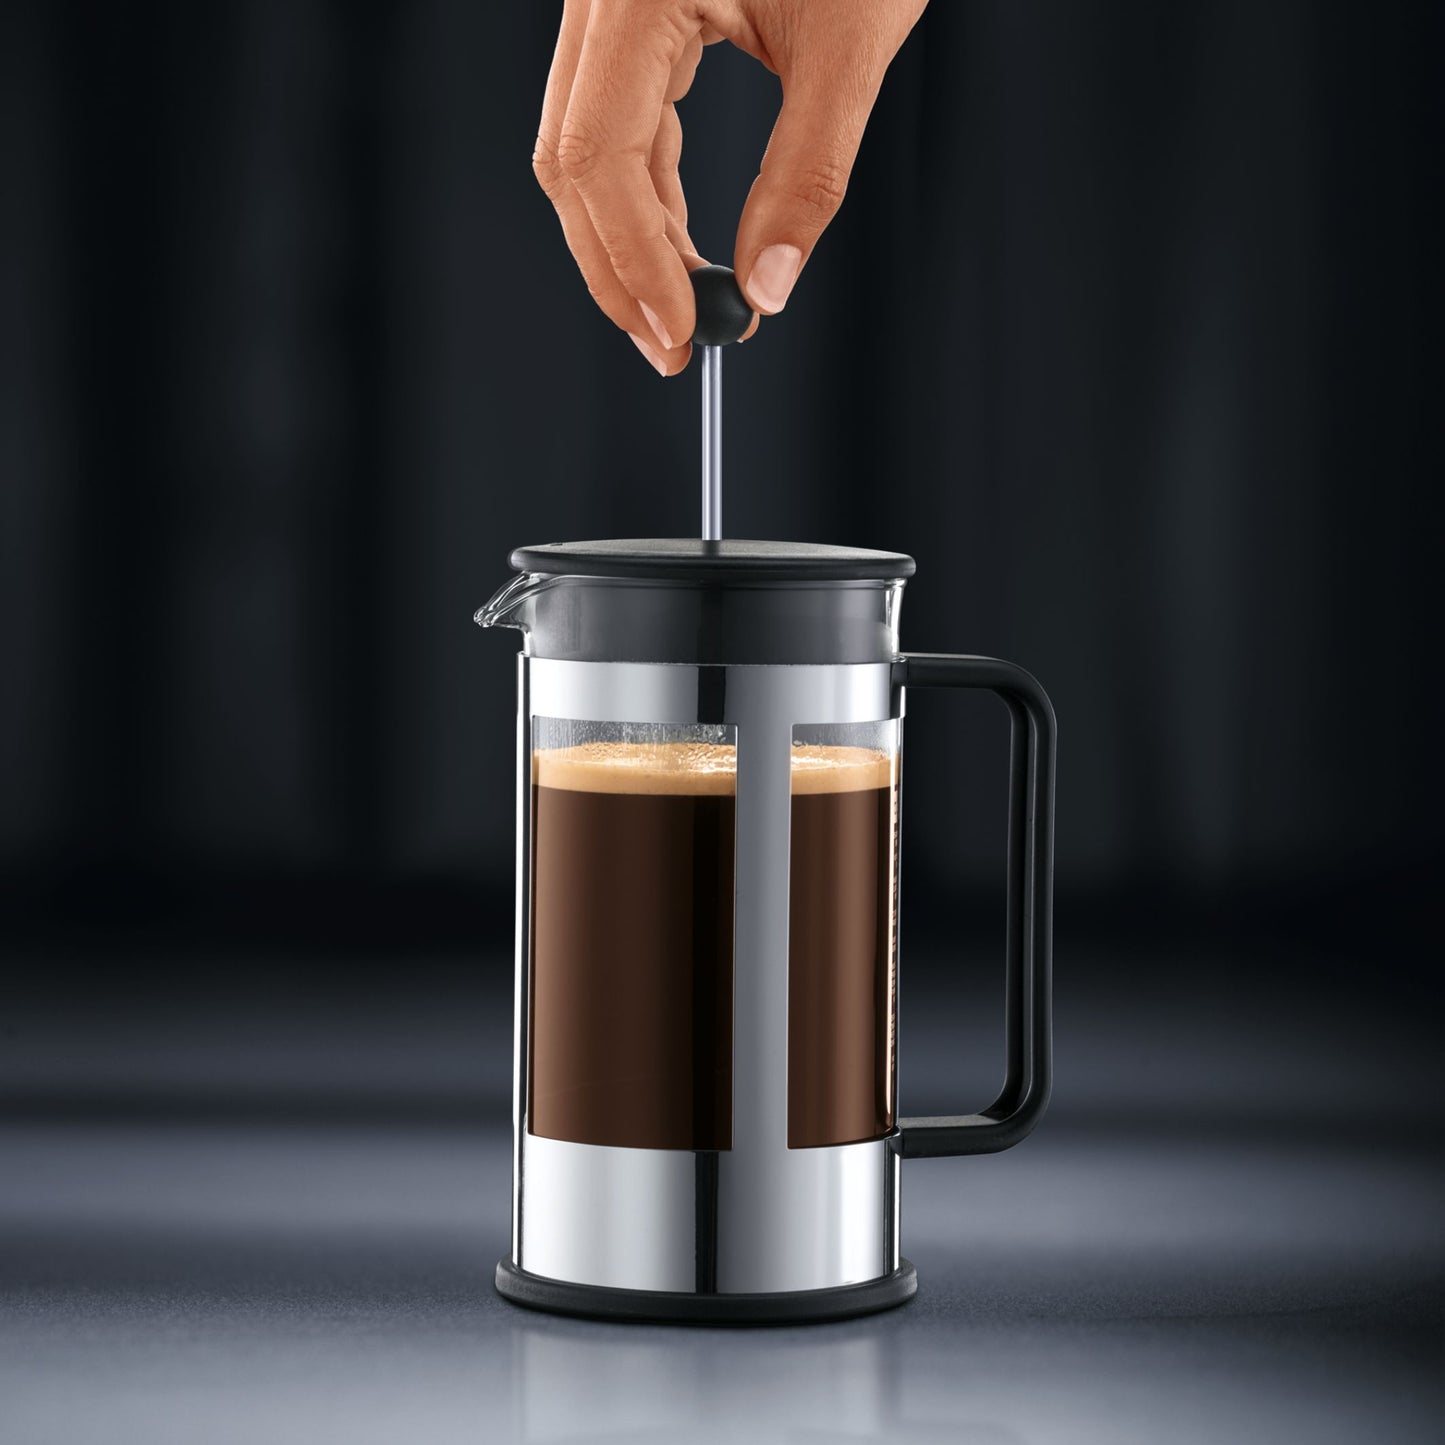 Bodum Kenya French Press Coffee Maker, 34 Ounce, Chrome